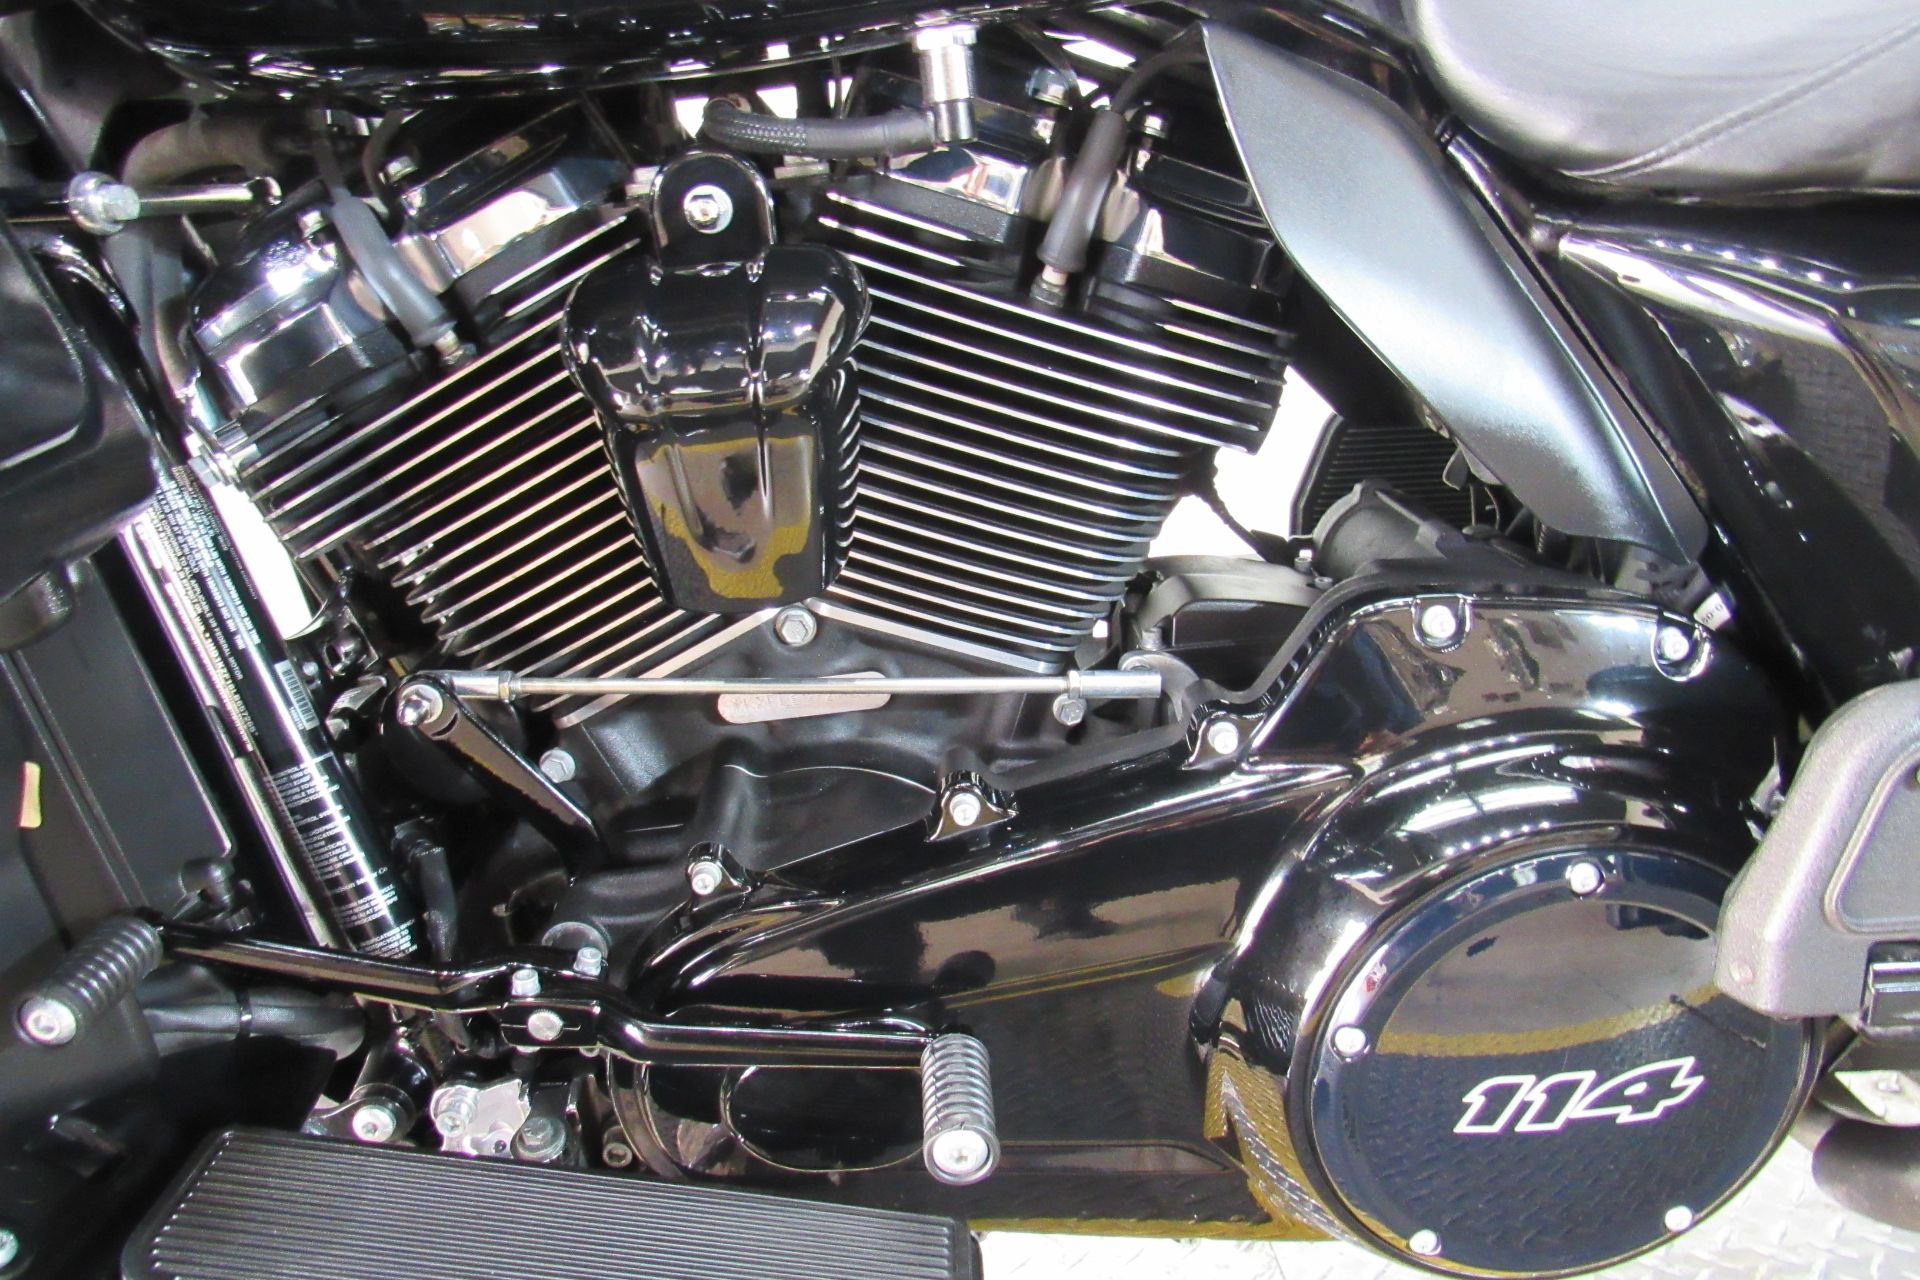 2020 Harley-Davidson Road Glide® Limited in Temecula, California - Photo 15